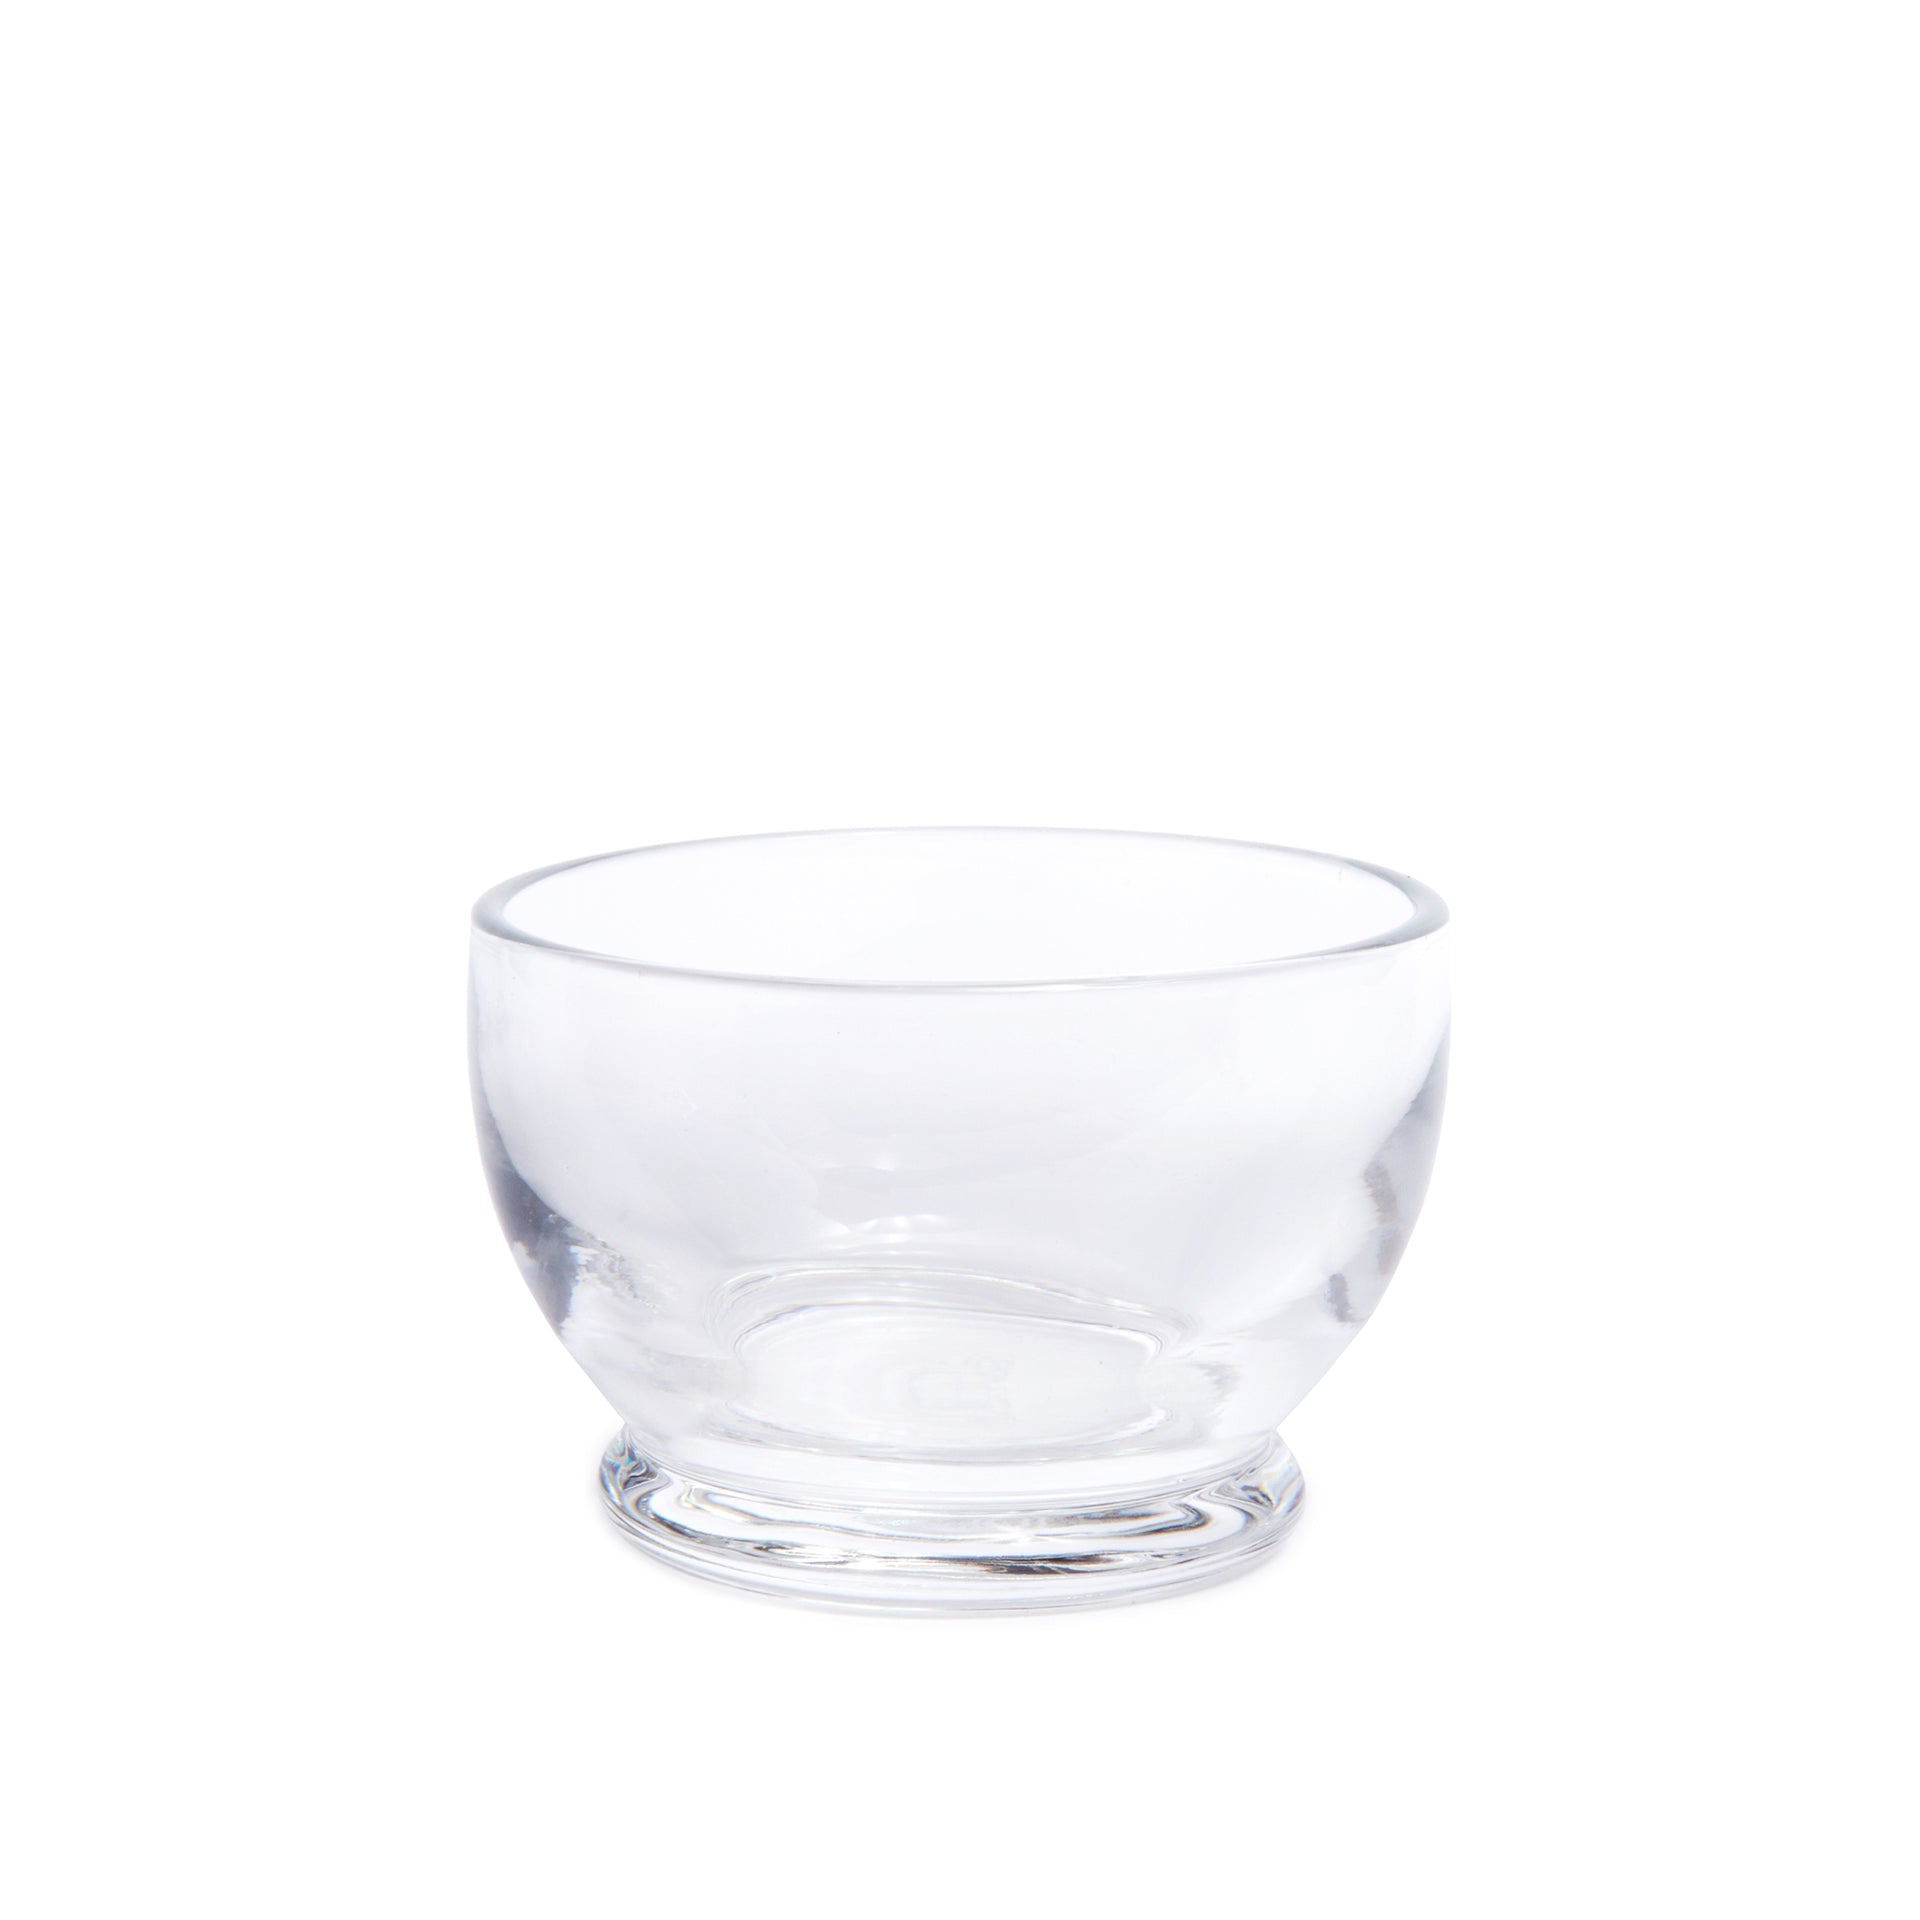 Libbey Aviva Glass Wave Serving Bowl, Large - Bed Bath & Beyond